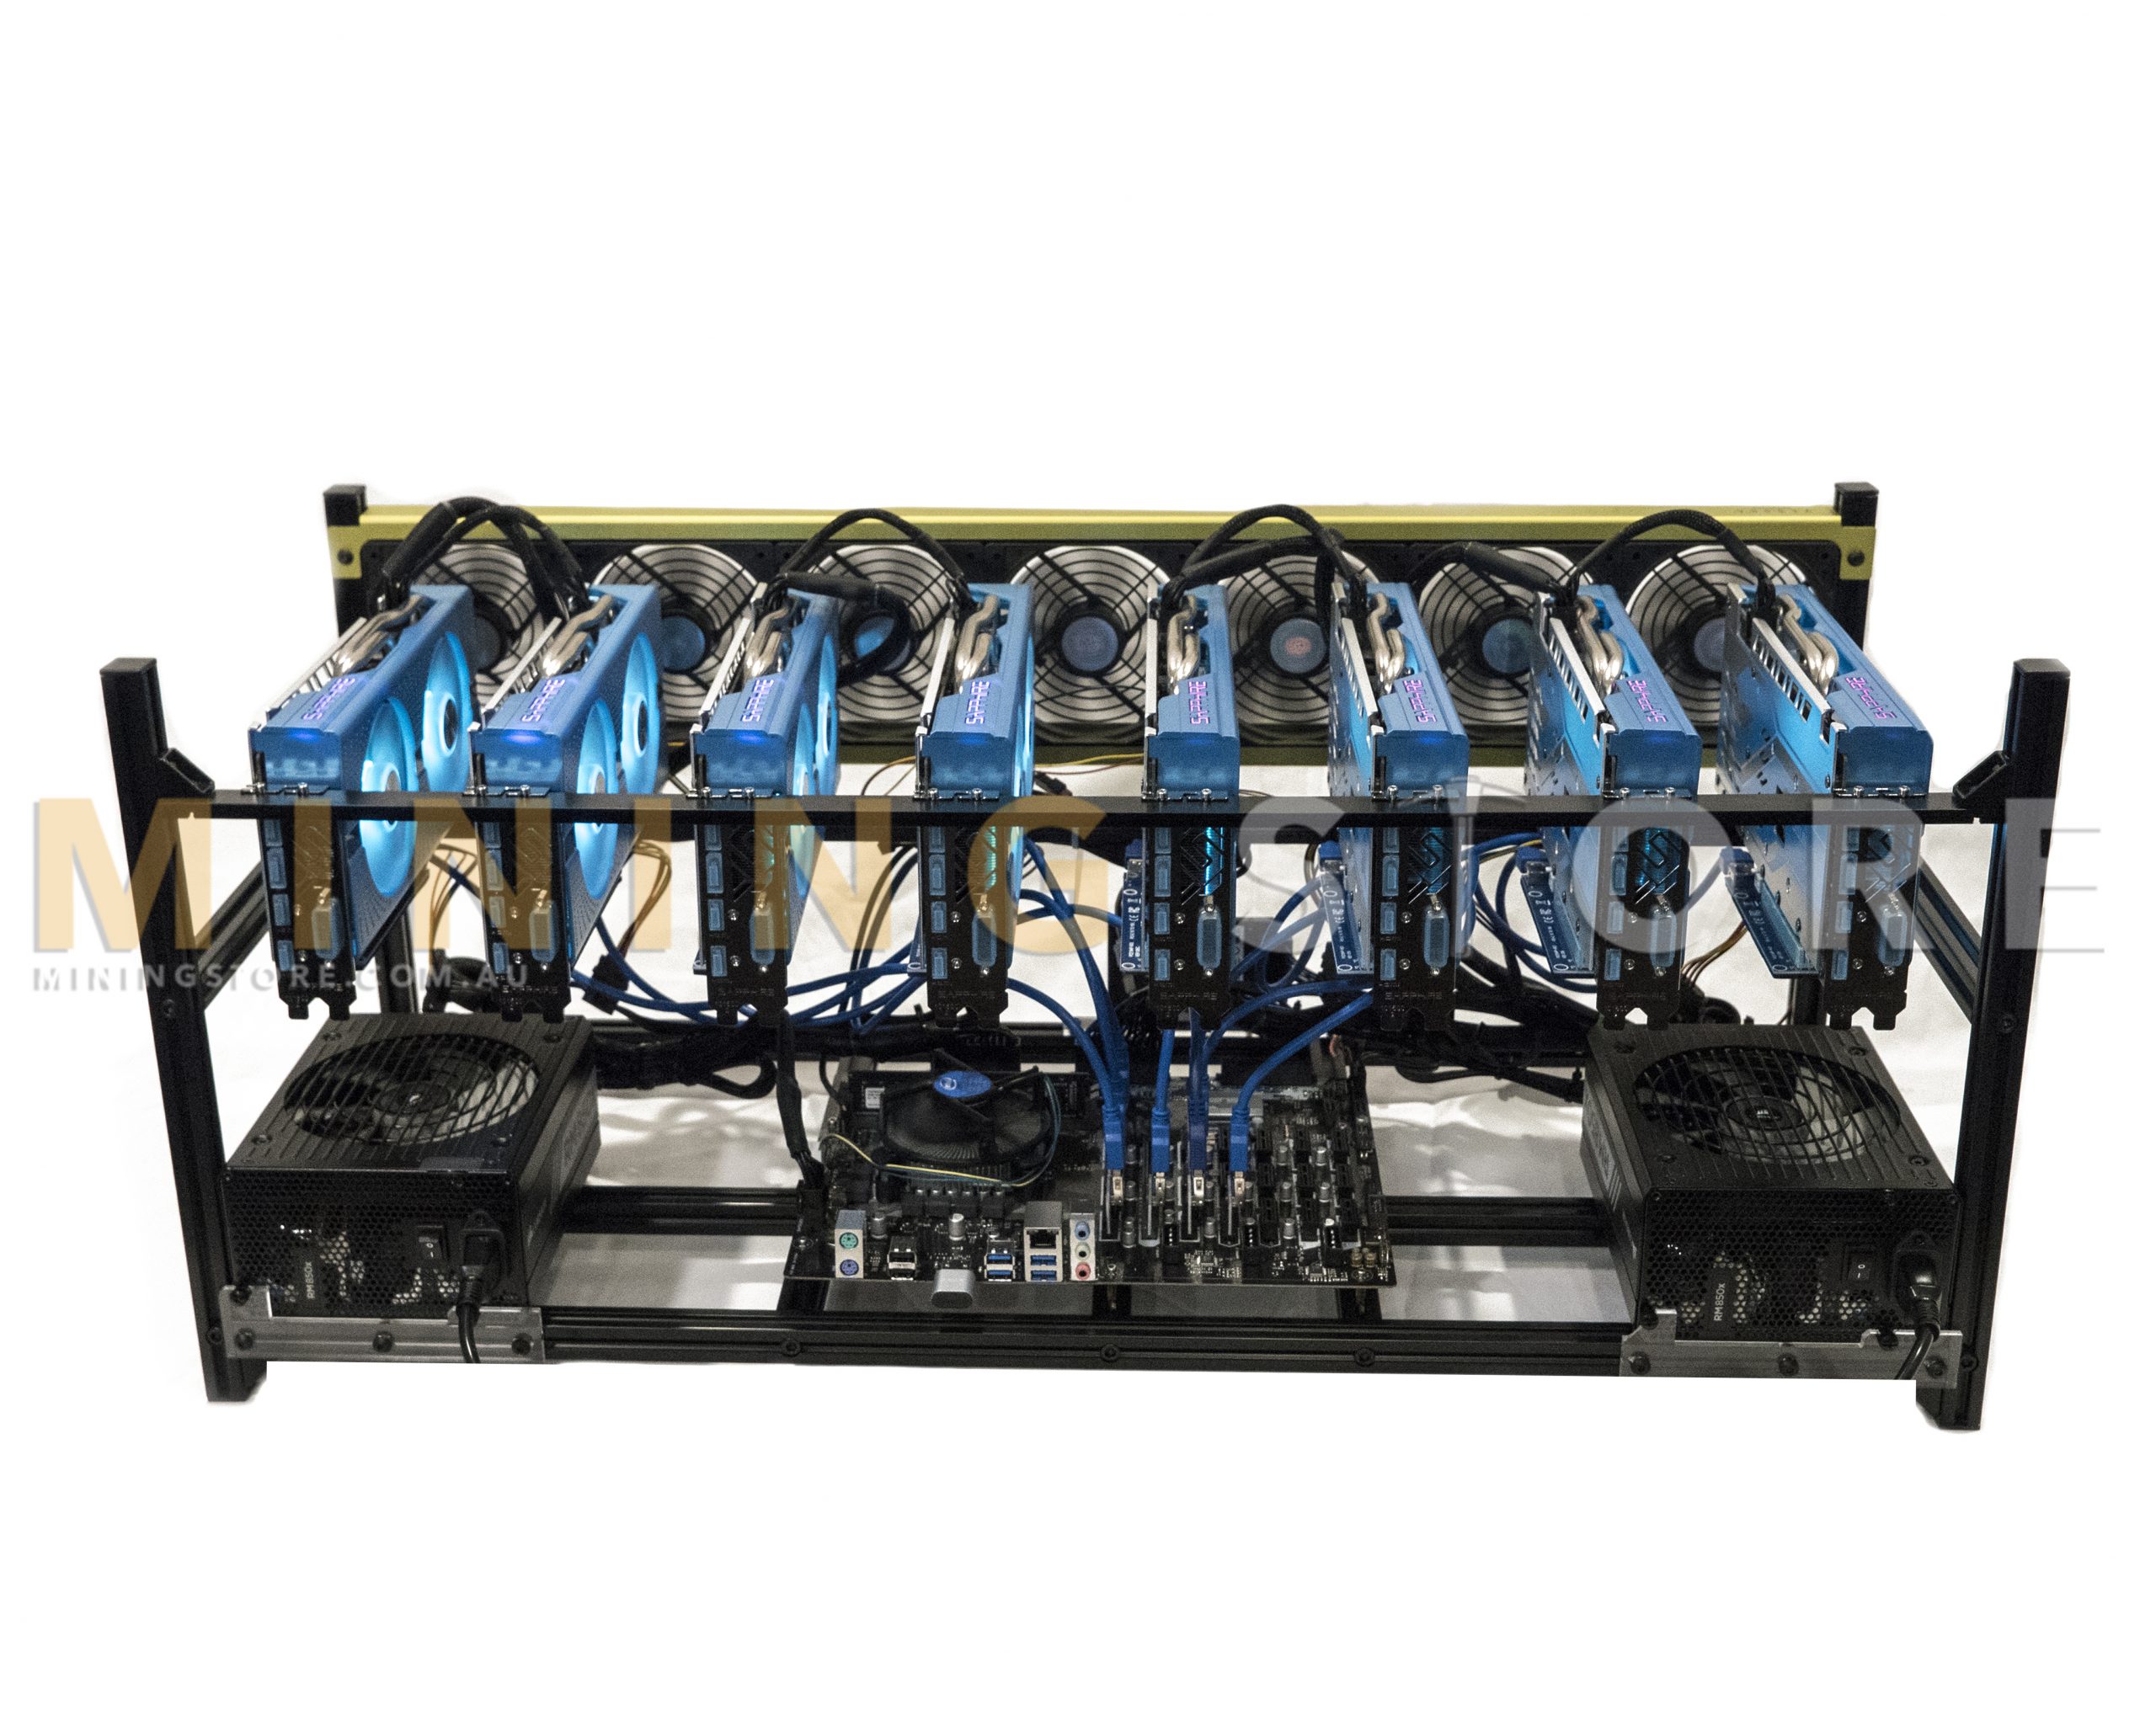 8 GPU AMD RX580 8GB